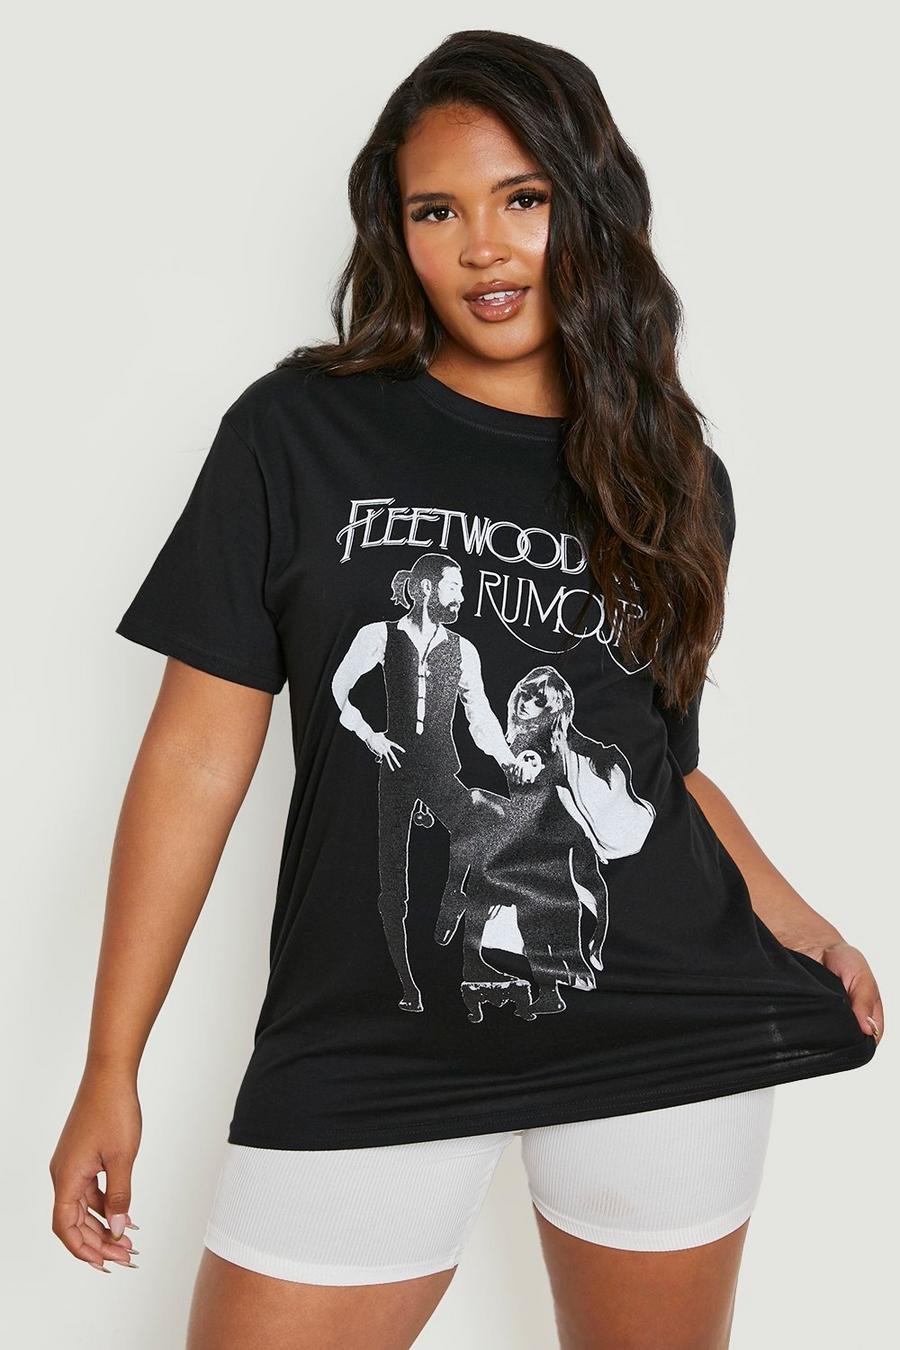 Black Plus Fleetwood Mac Rumours Band T-shirt image number 1